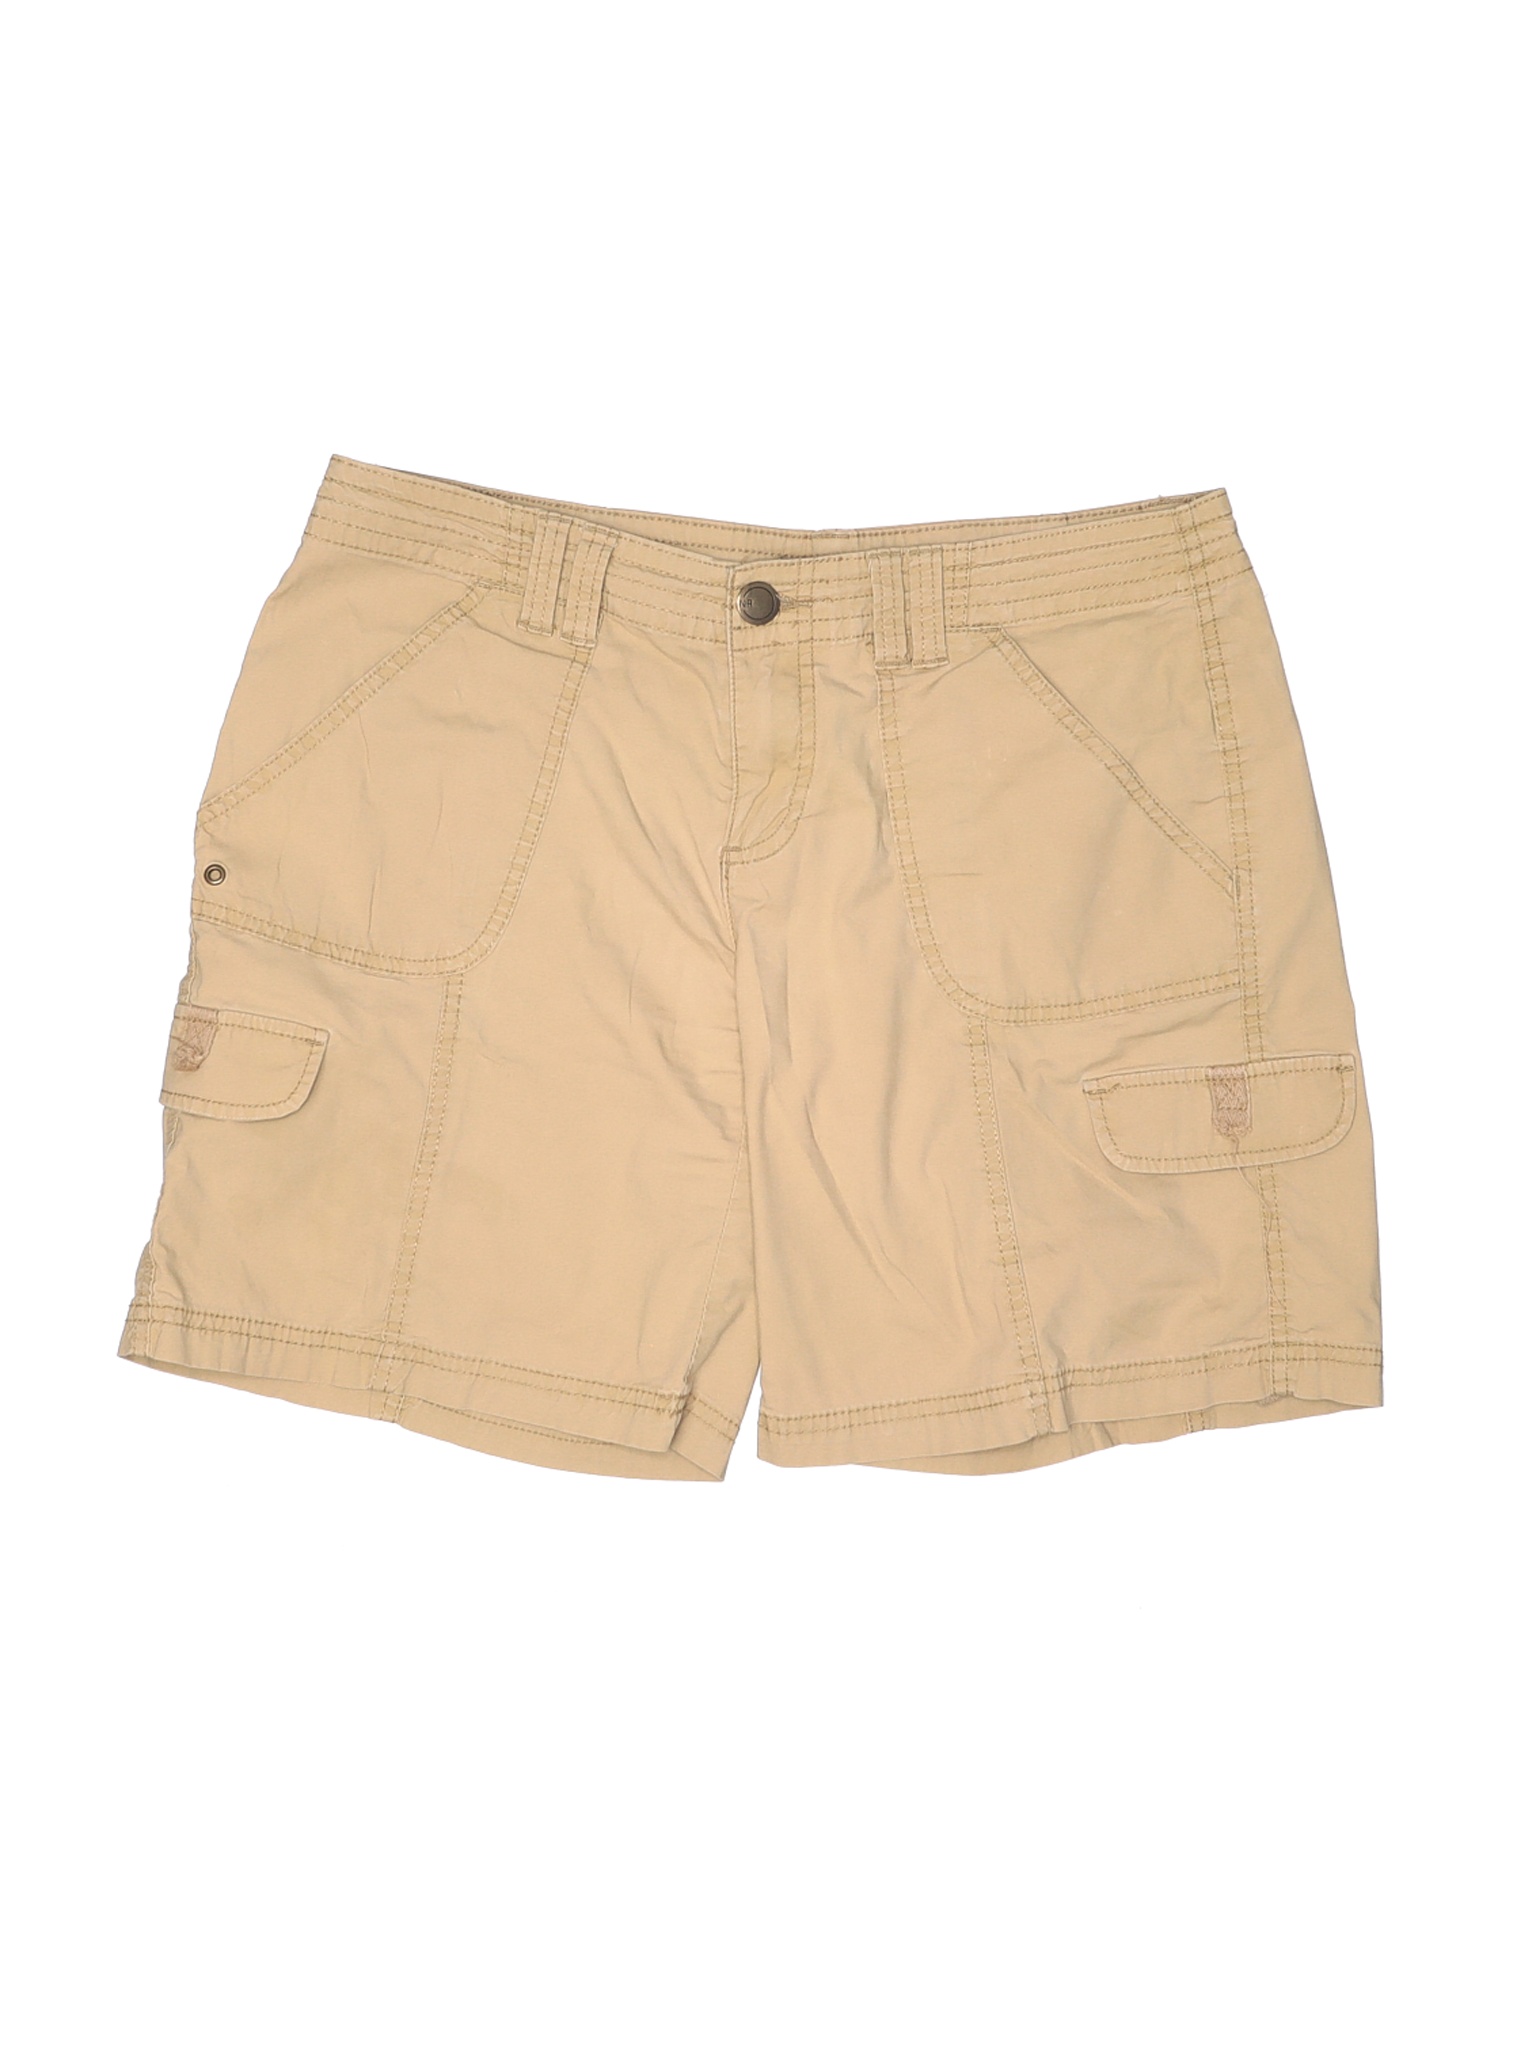 Natural Reflections Women Brown Cargo Shorts 8 | eBay